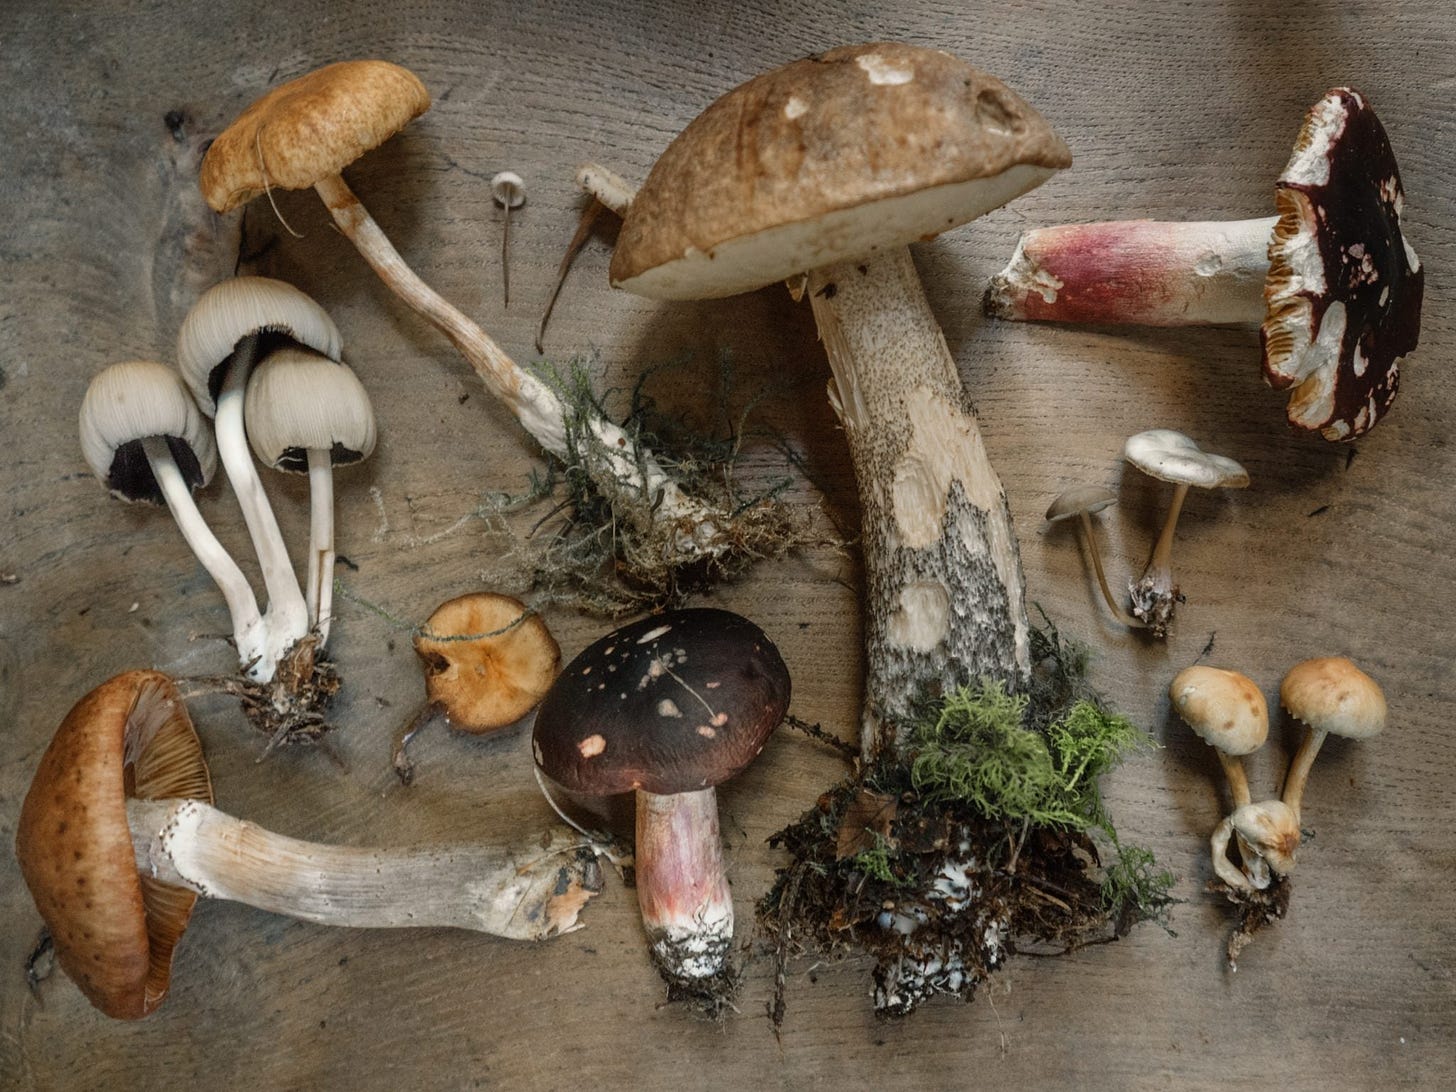 A selection of edible mushrooms